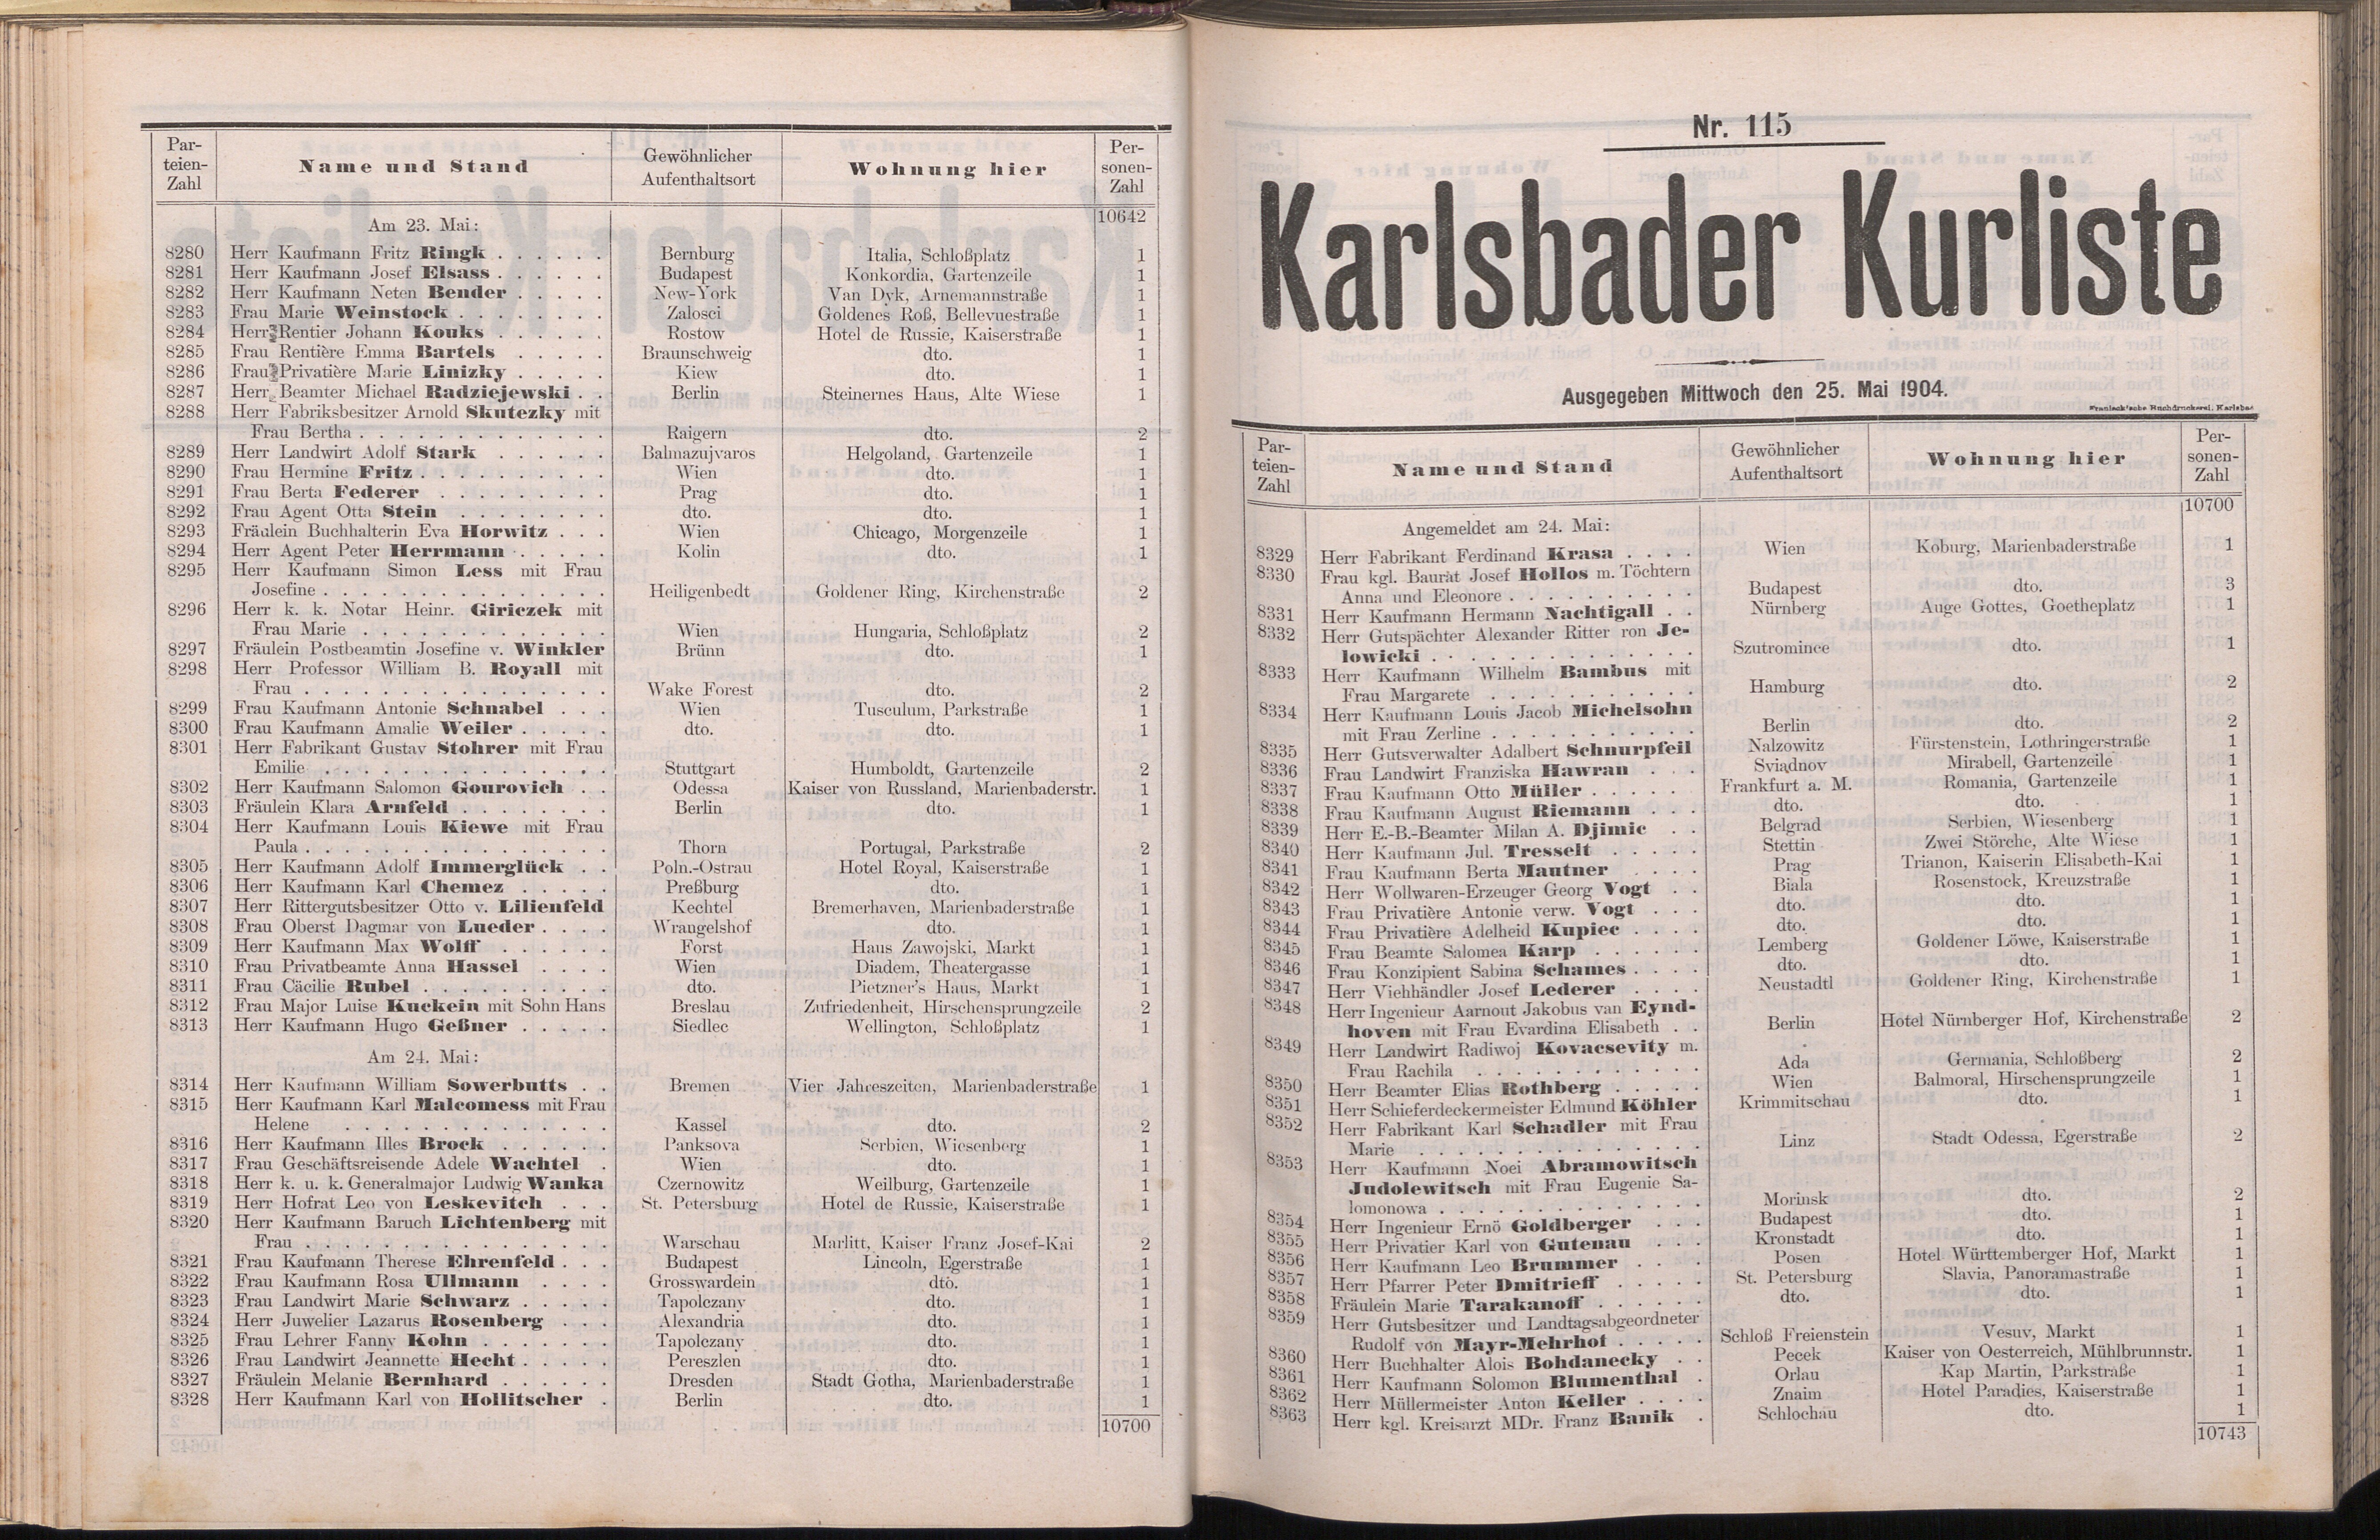 137. soap-kv_knihovna_karlsbader-kurliste-1904_1380